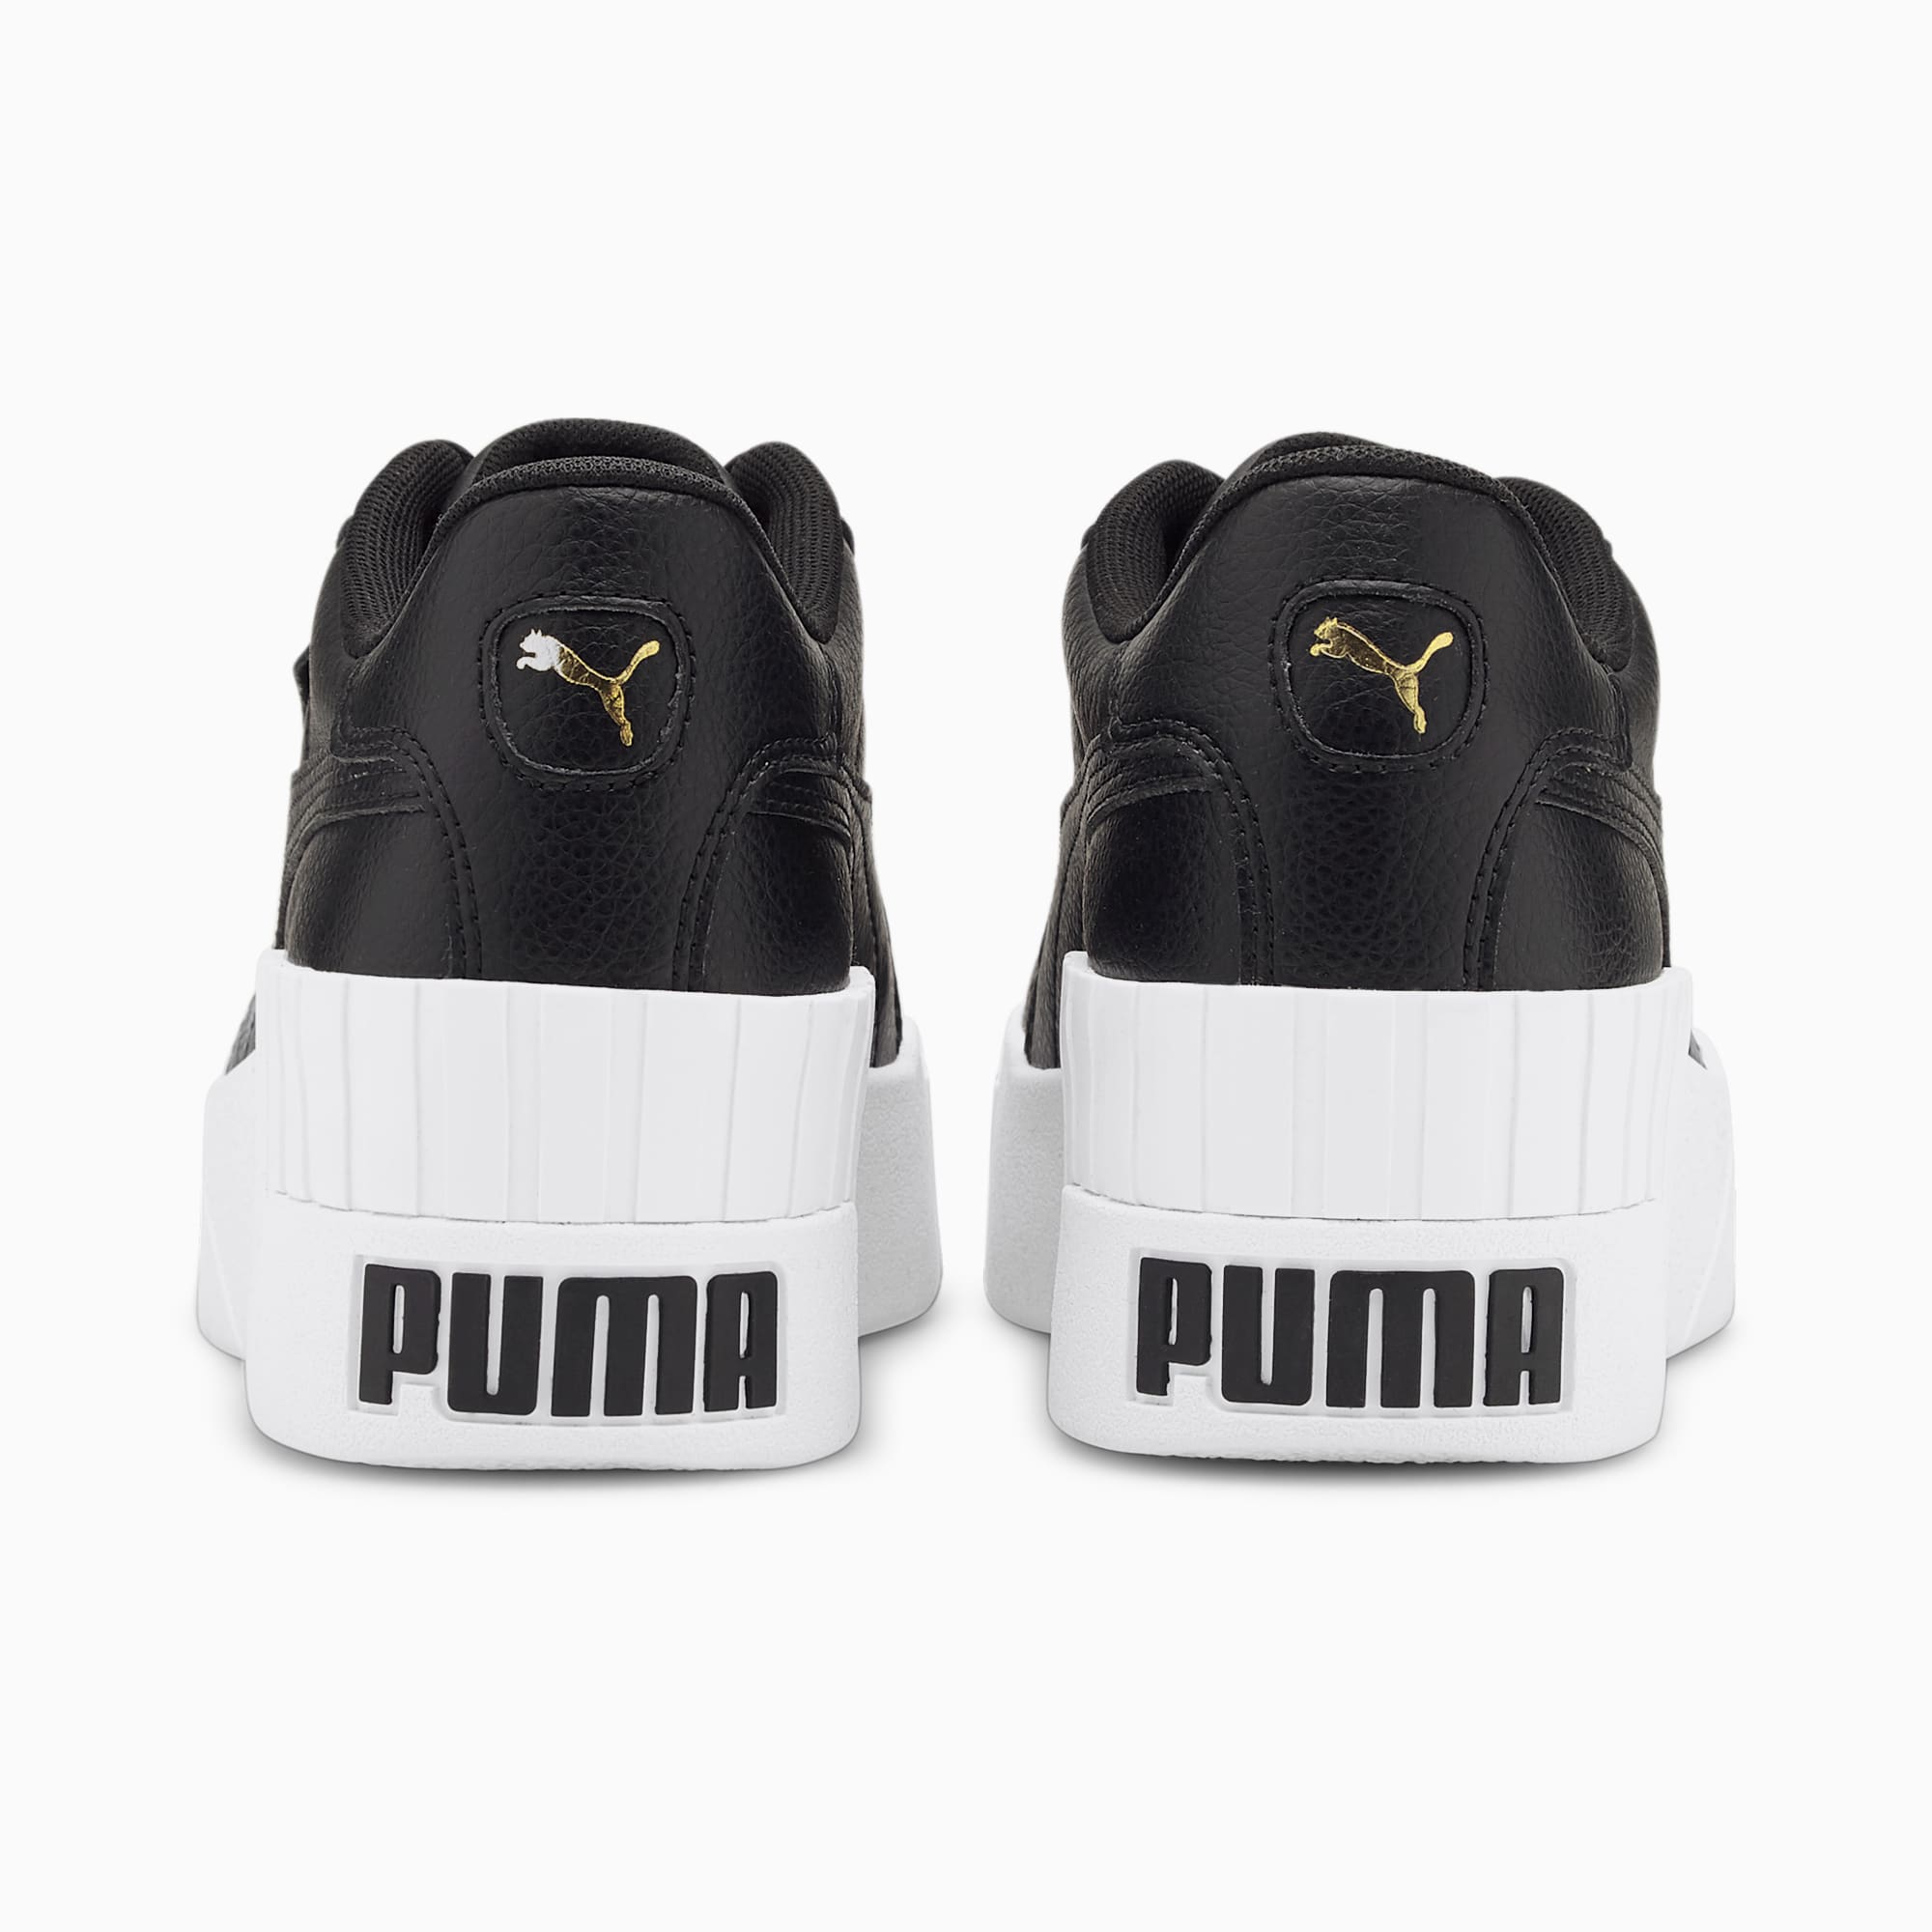 PUMA Cali Wedge Women's Trainers, Black/White, Size 35,5, Shoes